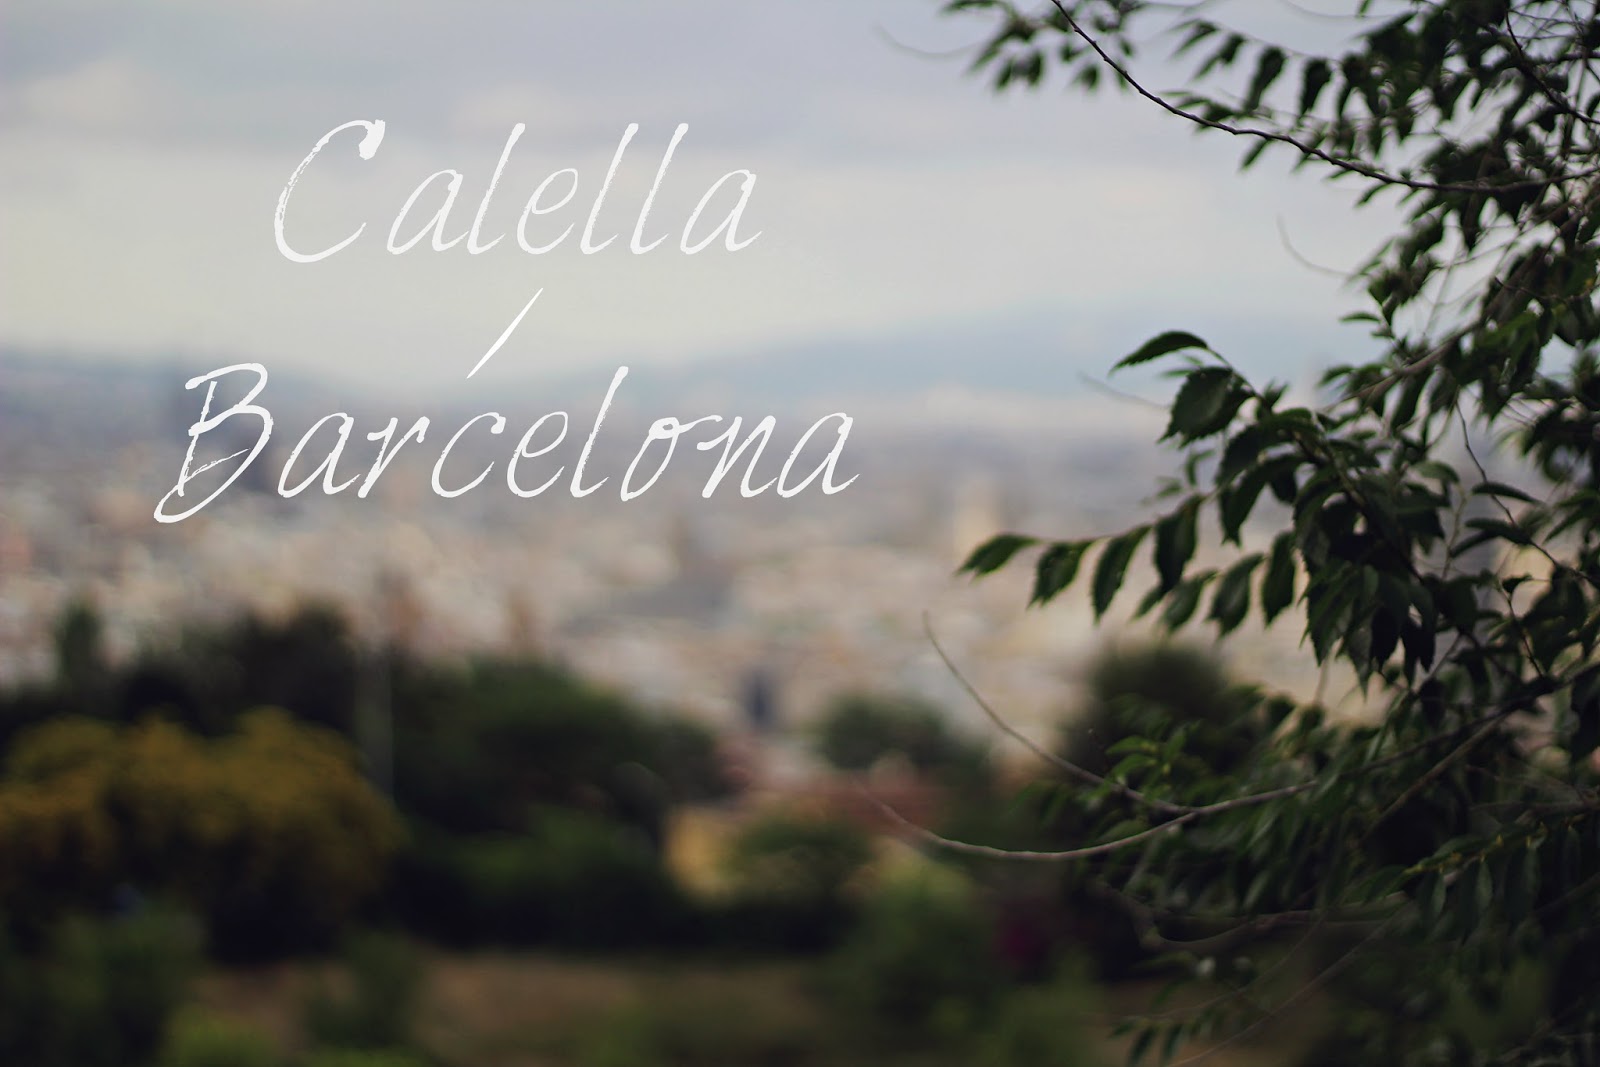 Calella/Barcelona